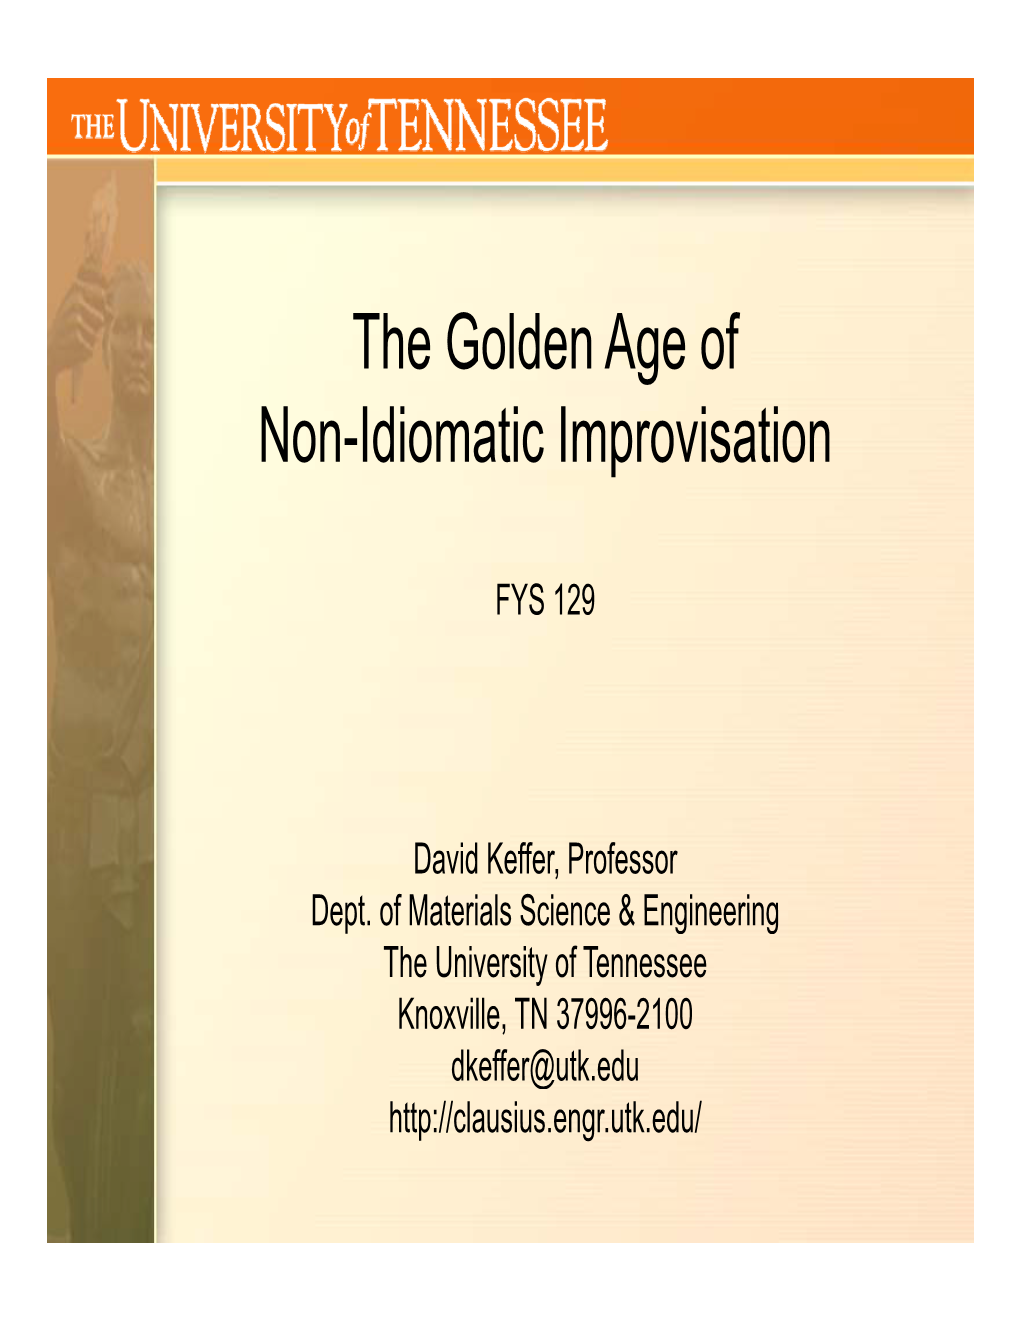 The Golden Age of N Idi Ti I I Ti Non-Idiomatic Improvisation